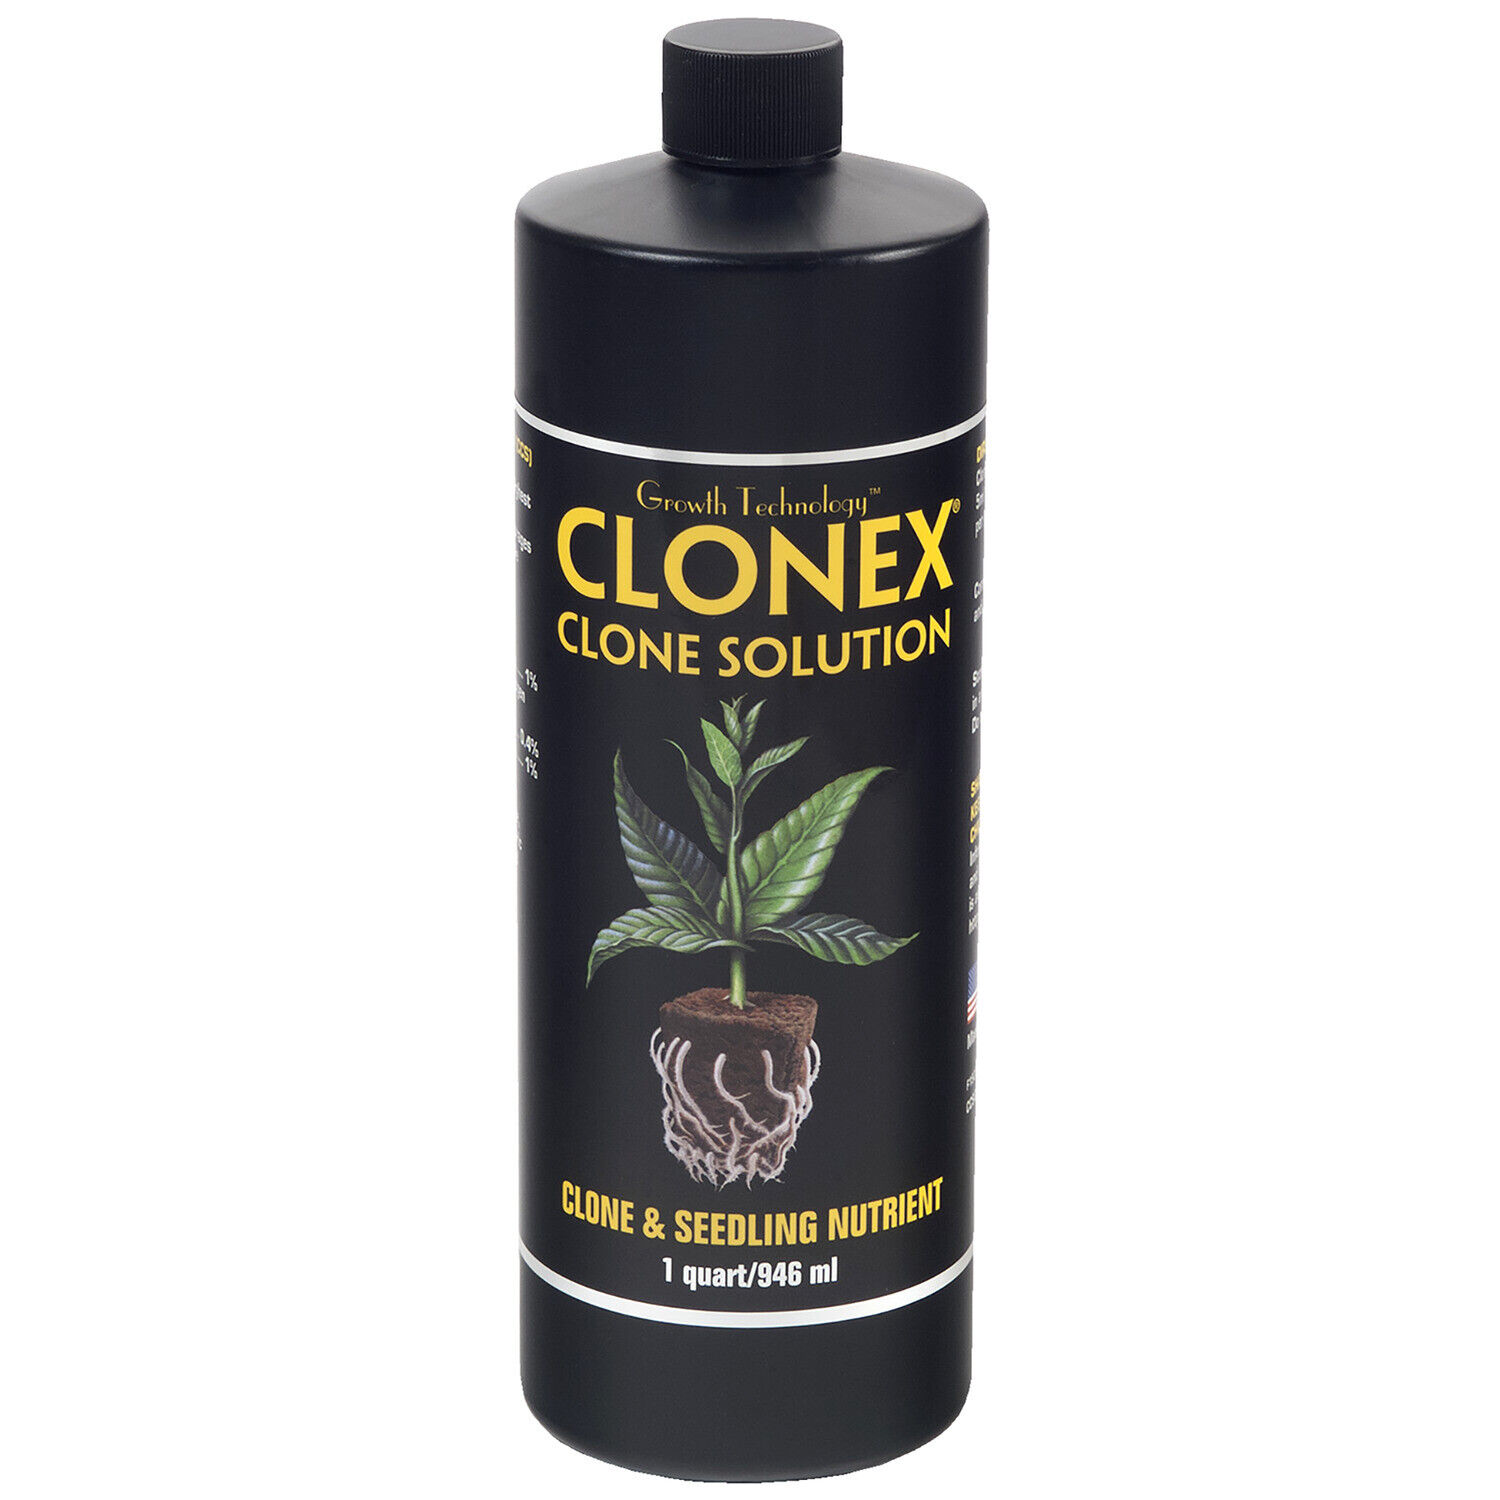 HydroDynamics Clonex Clone Solution - Clone & Seedling Nutrient, 1 Quart